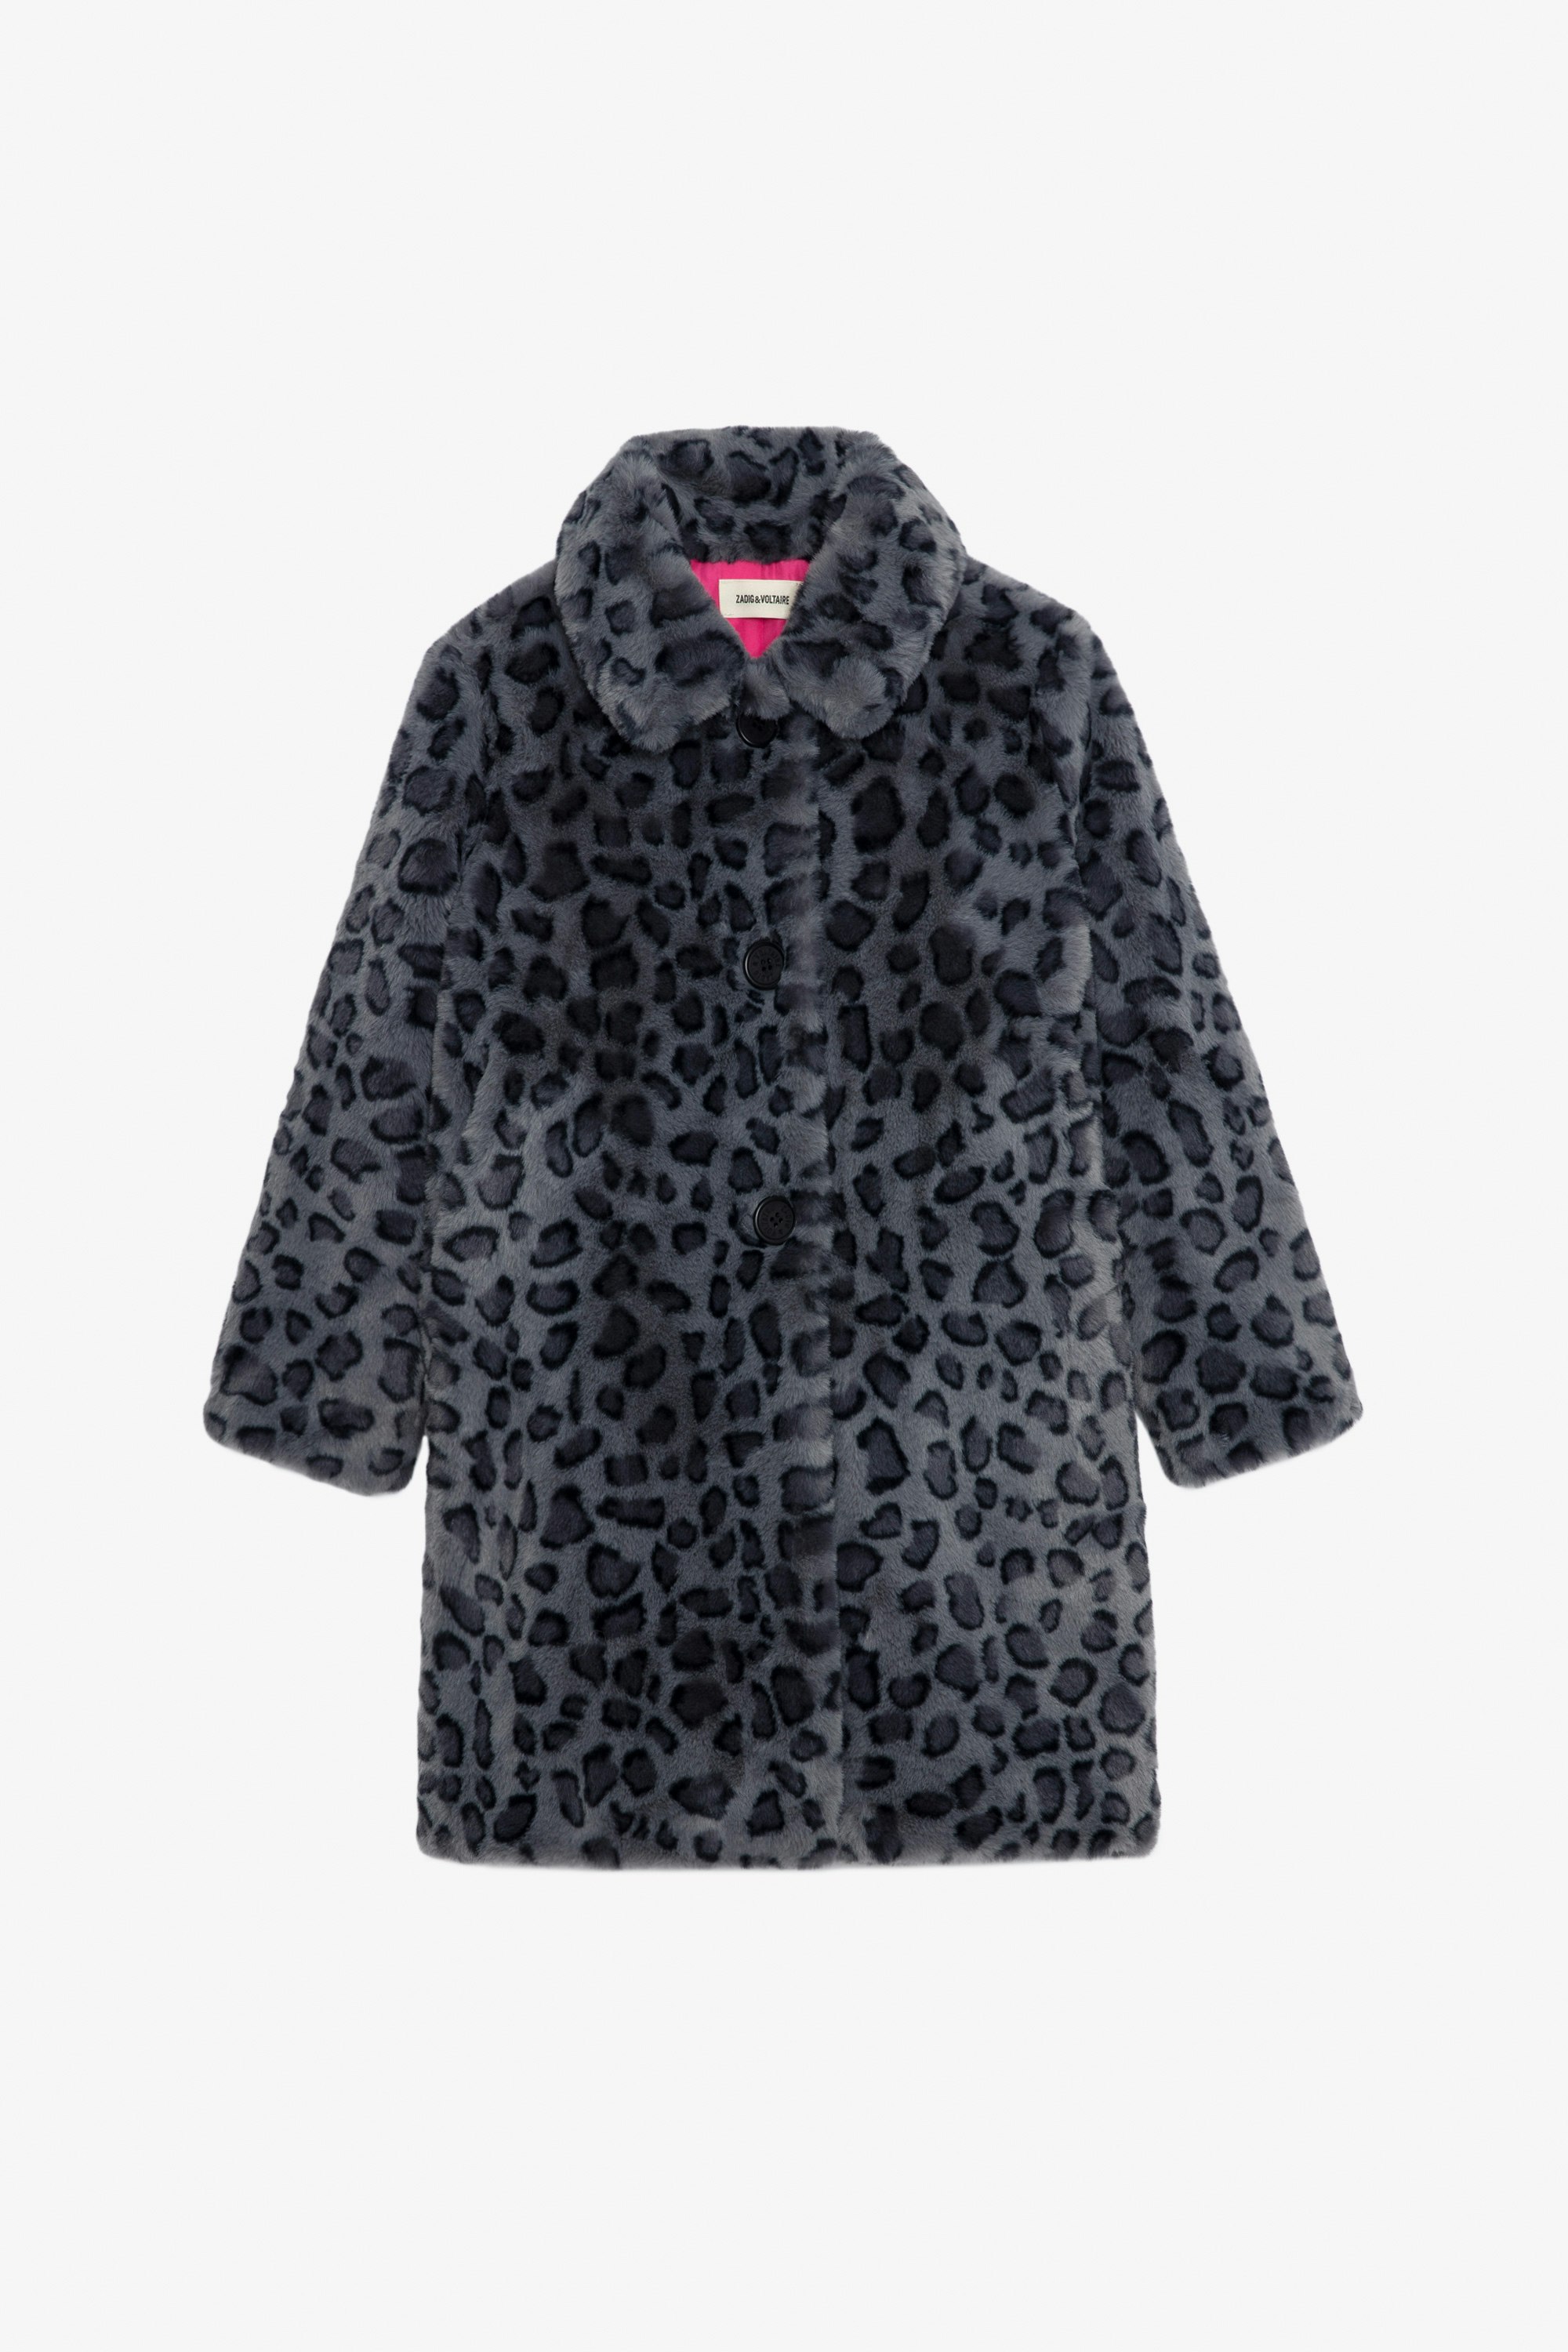 Madeleine Girls’ Coat Girls’ black leopard-print fleece coat with contrasting lining.